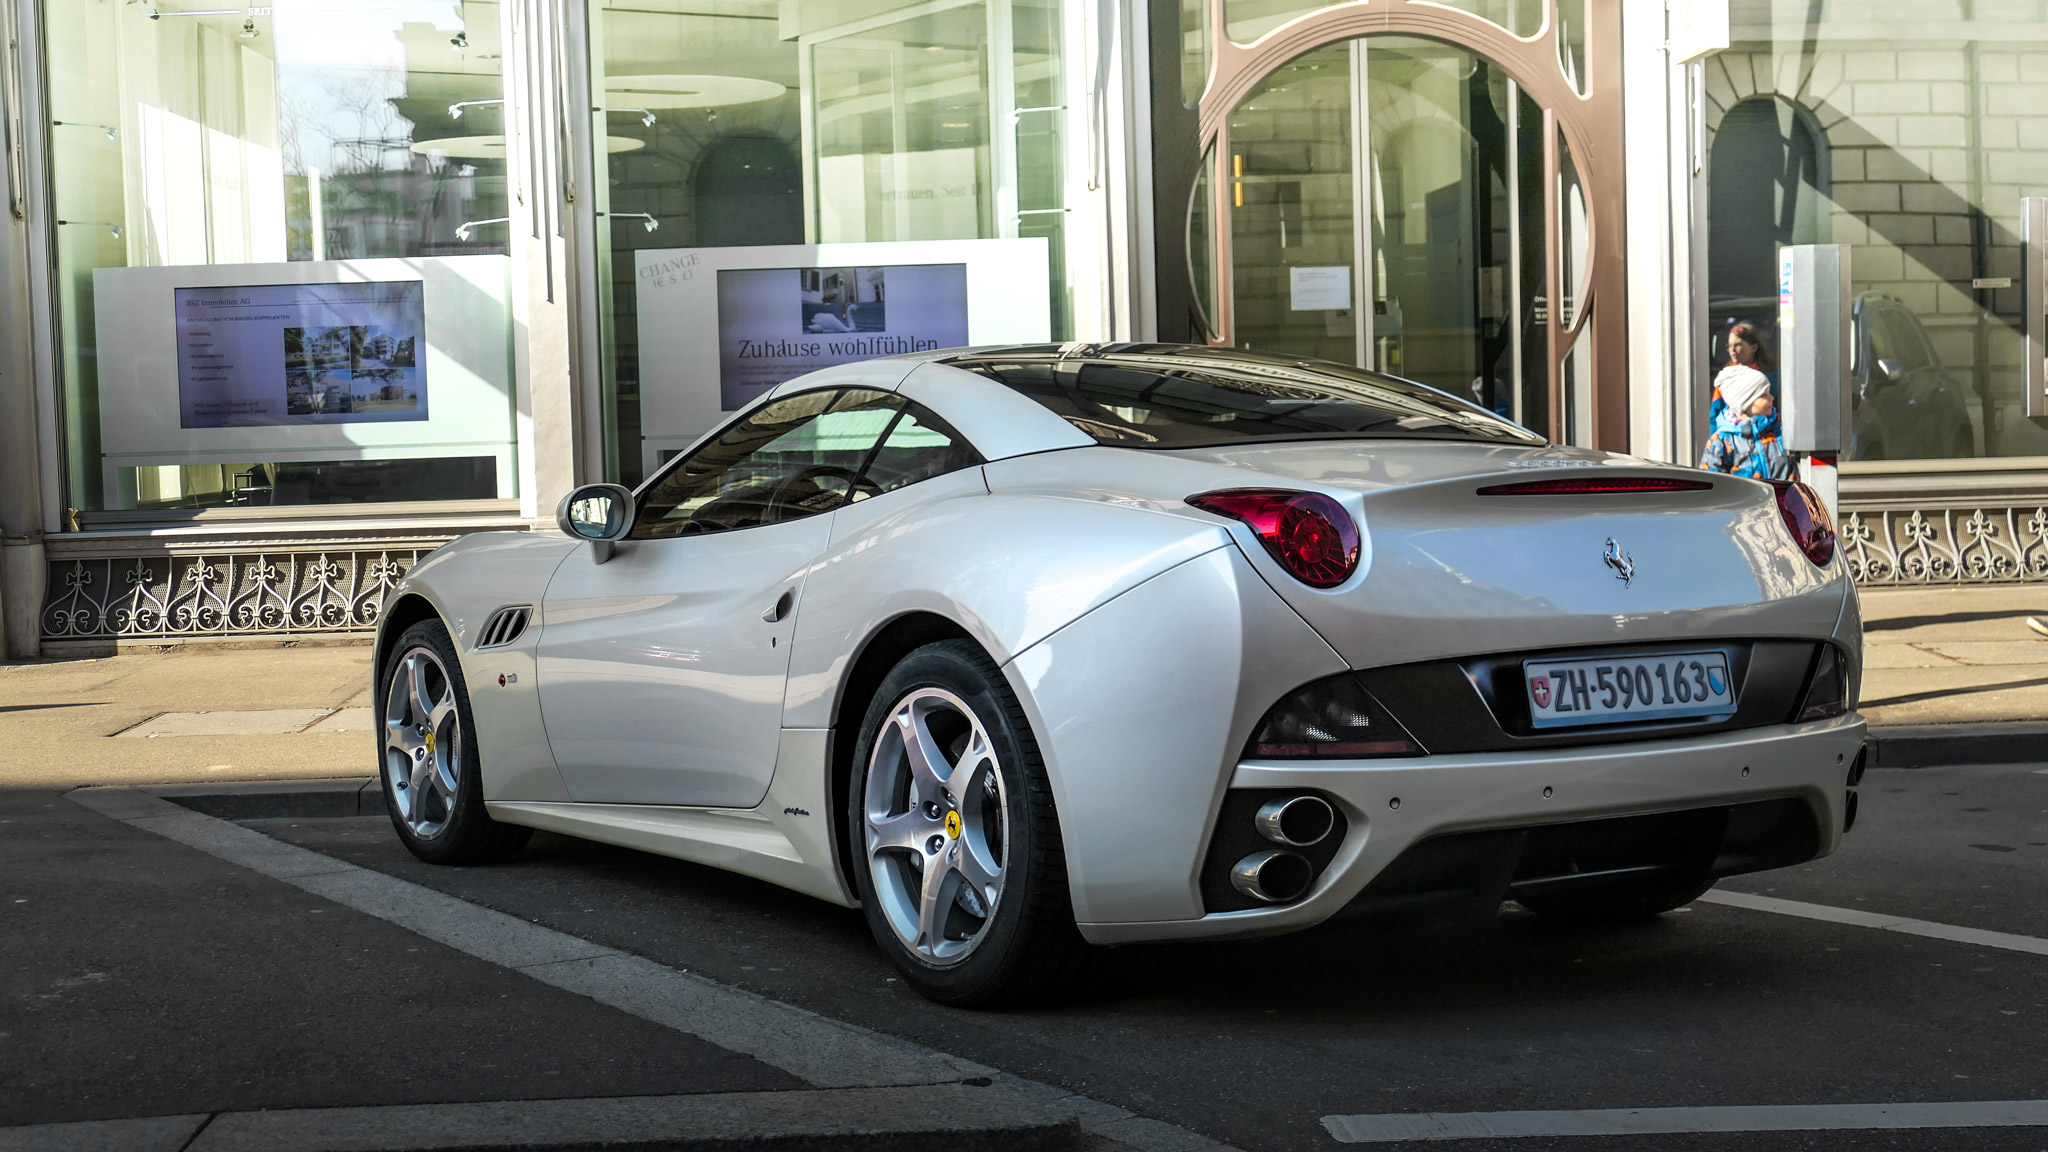 Ferrari California - ZH590163 (CH)